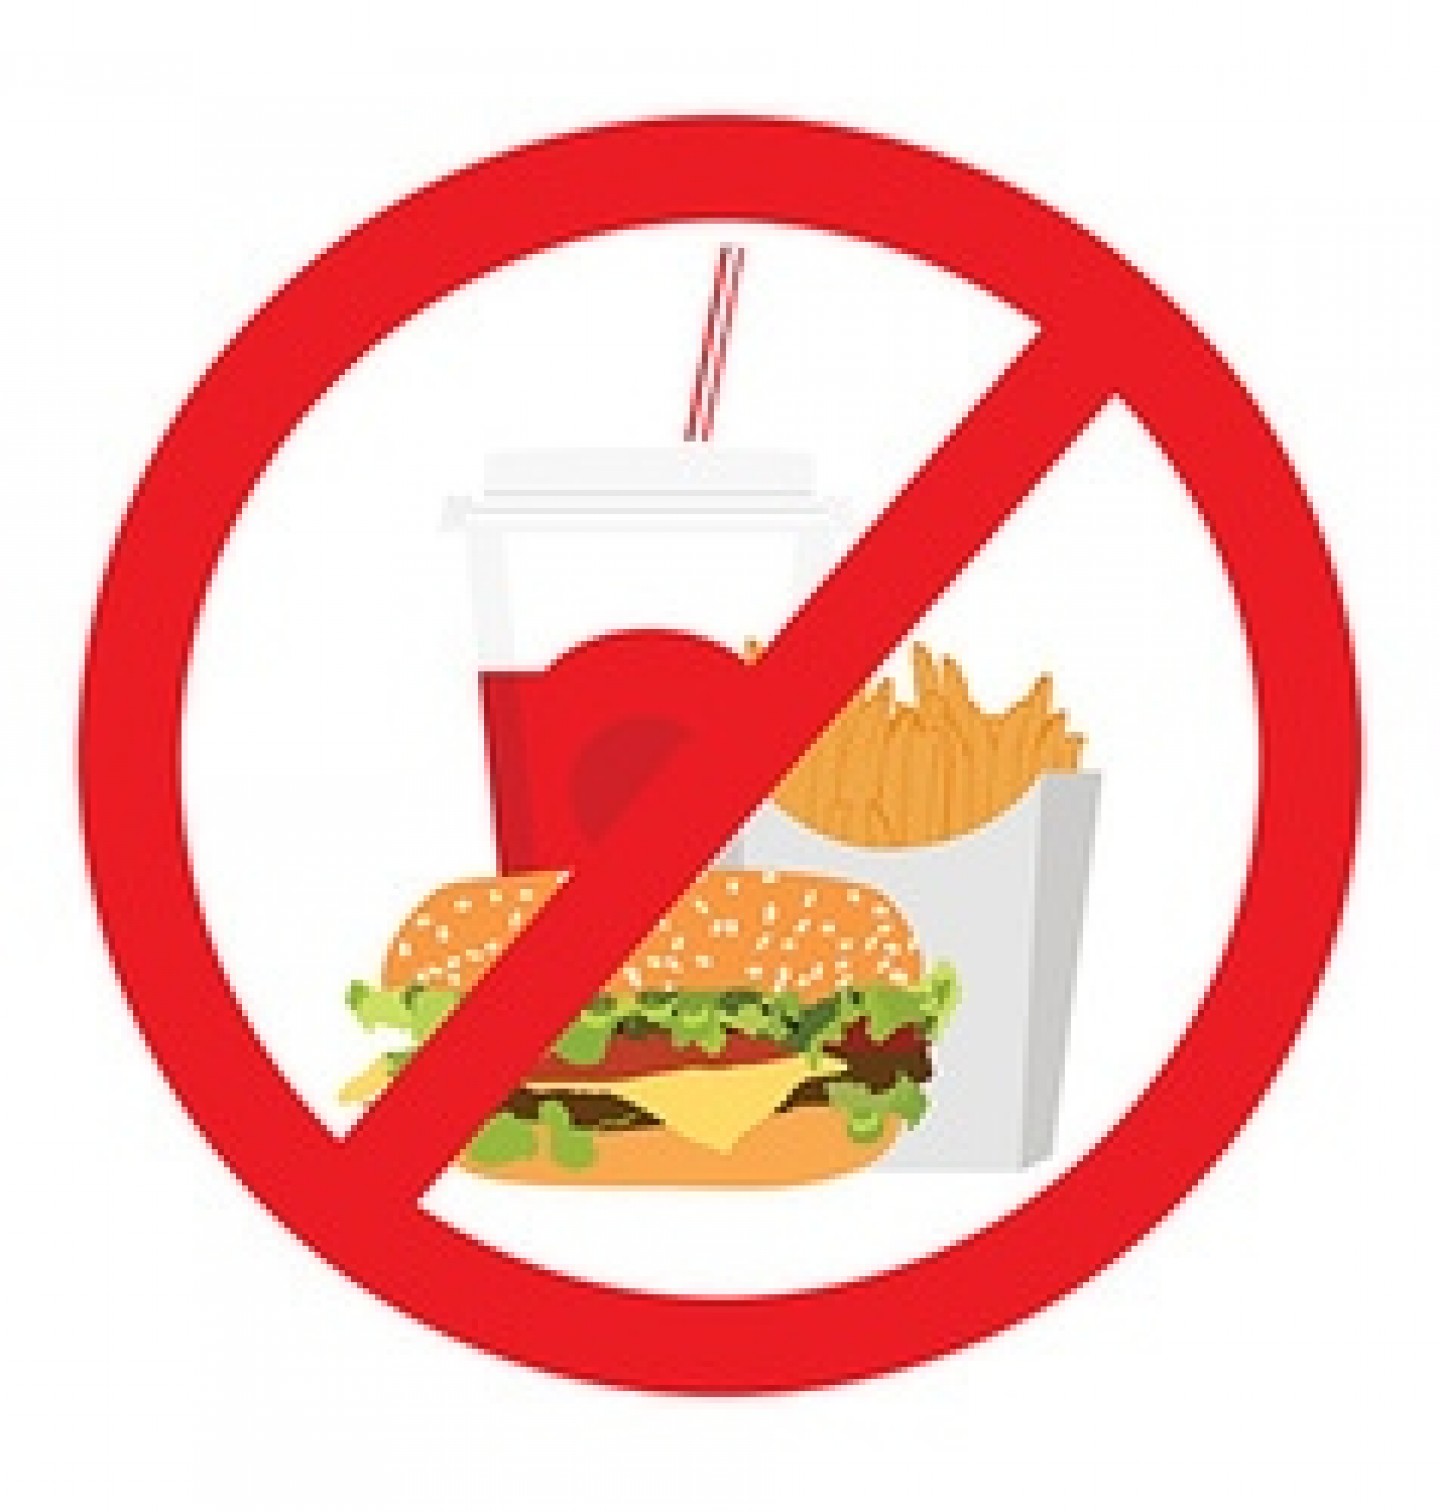 no-fast-food-sign-vector-8358292